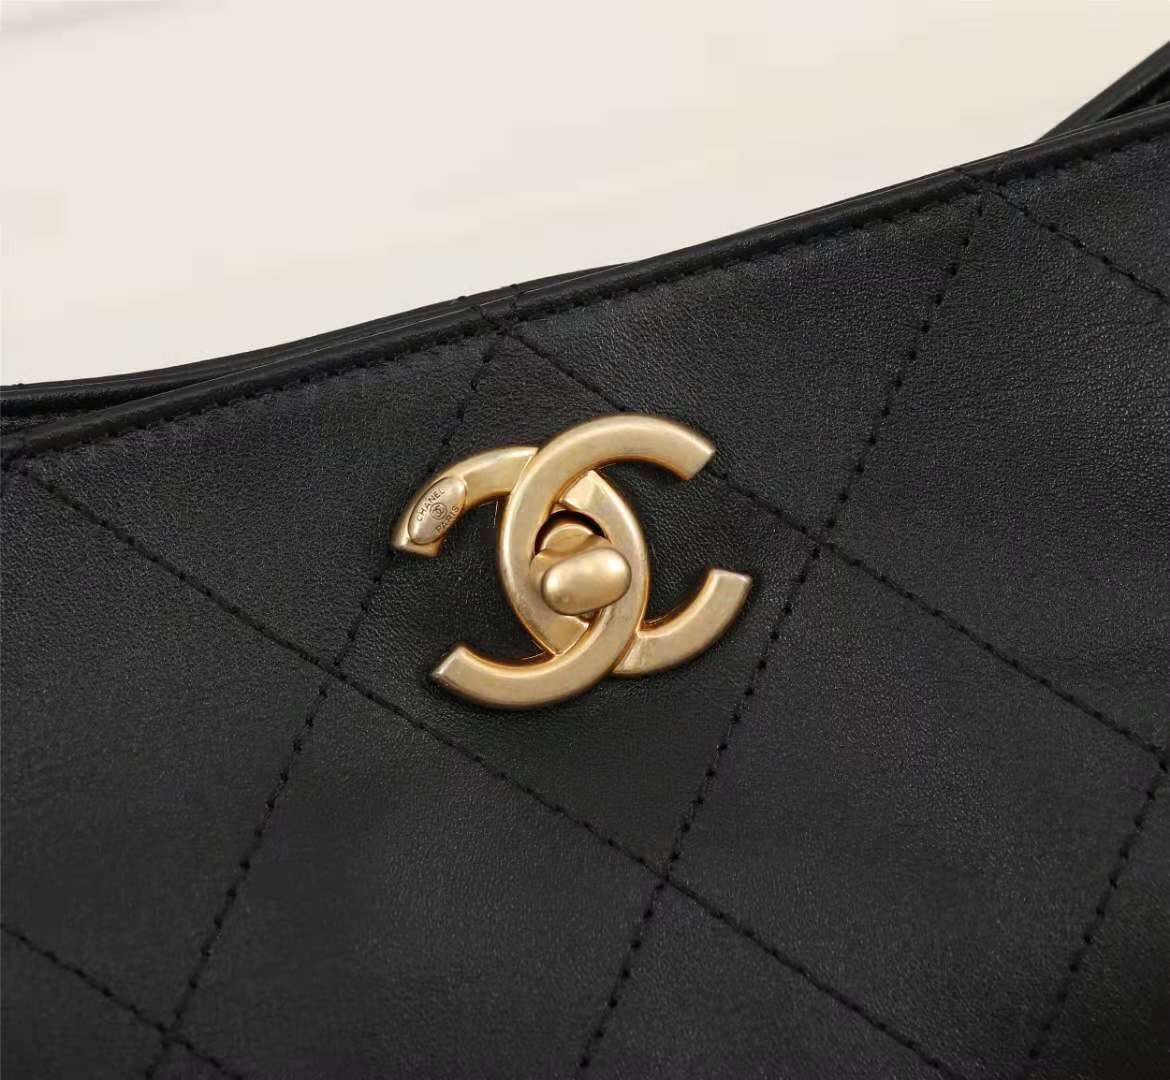 Chanel Hobo Handbag Black A57573 - Click Image to Close